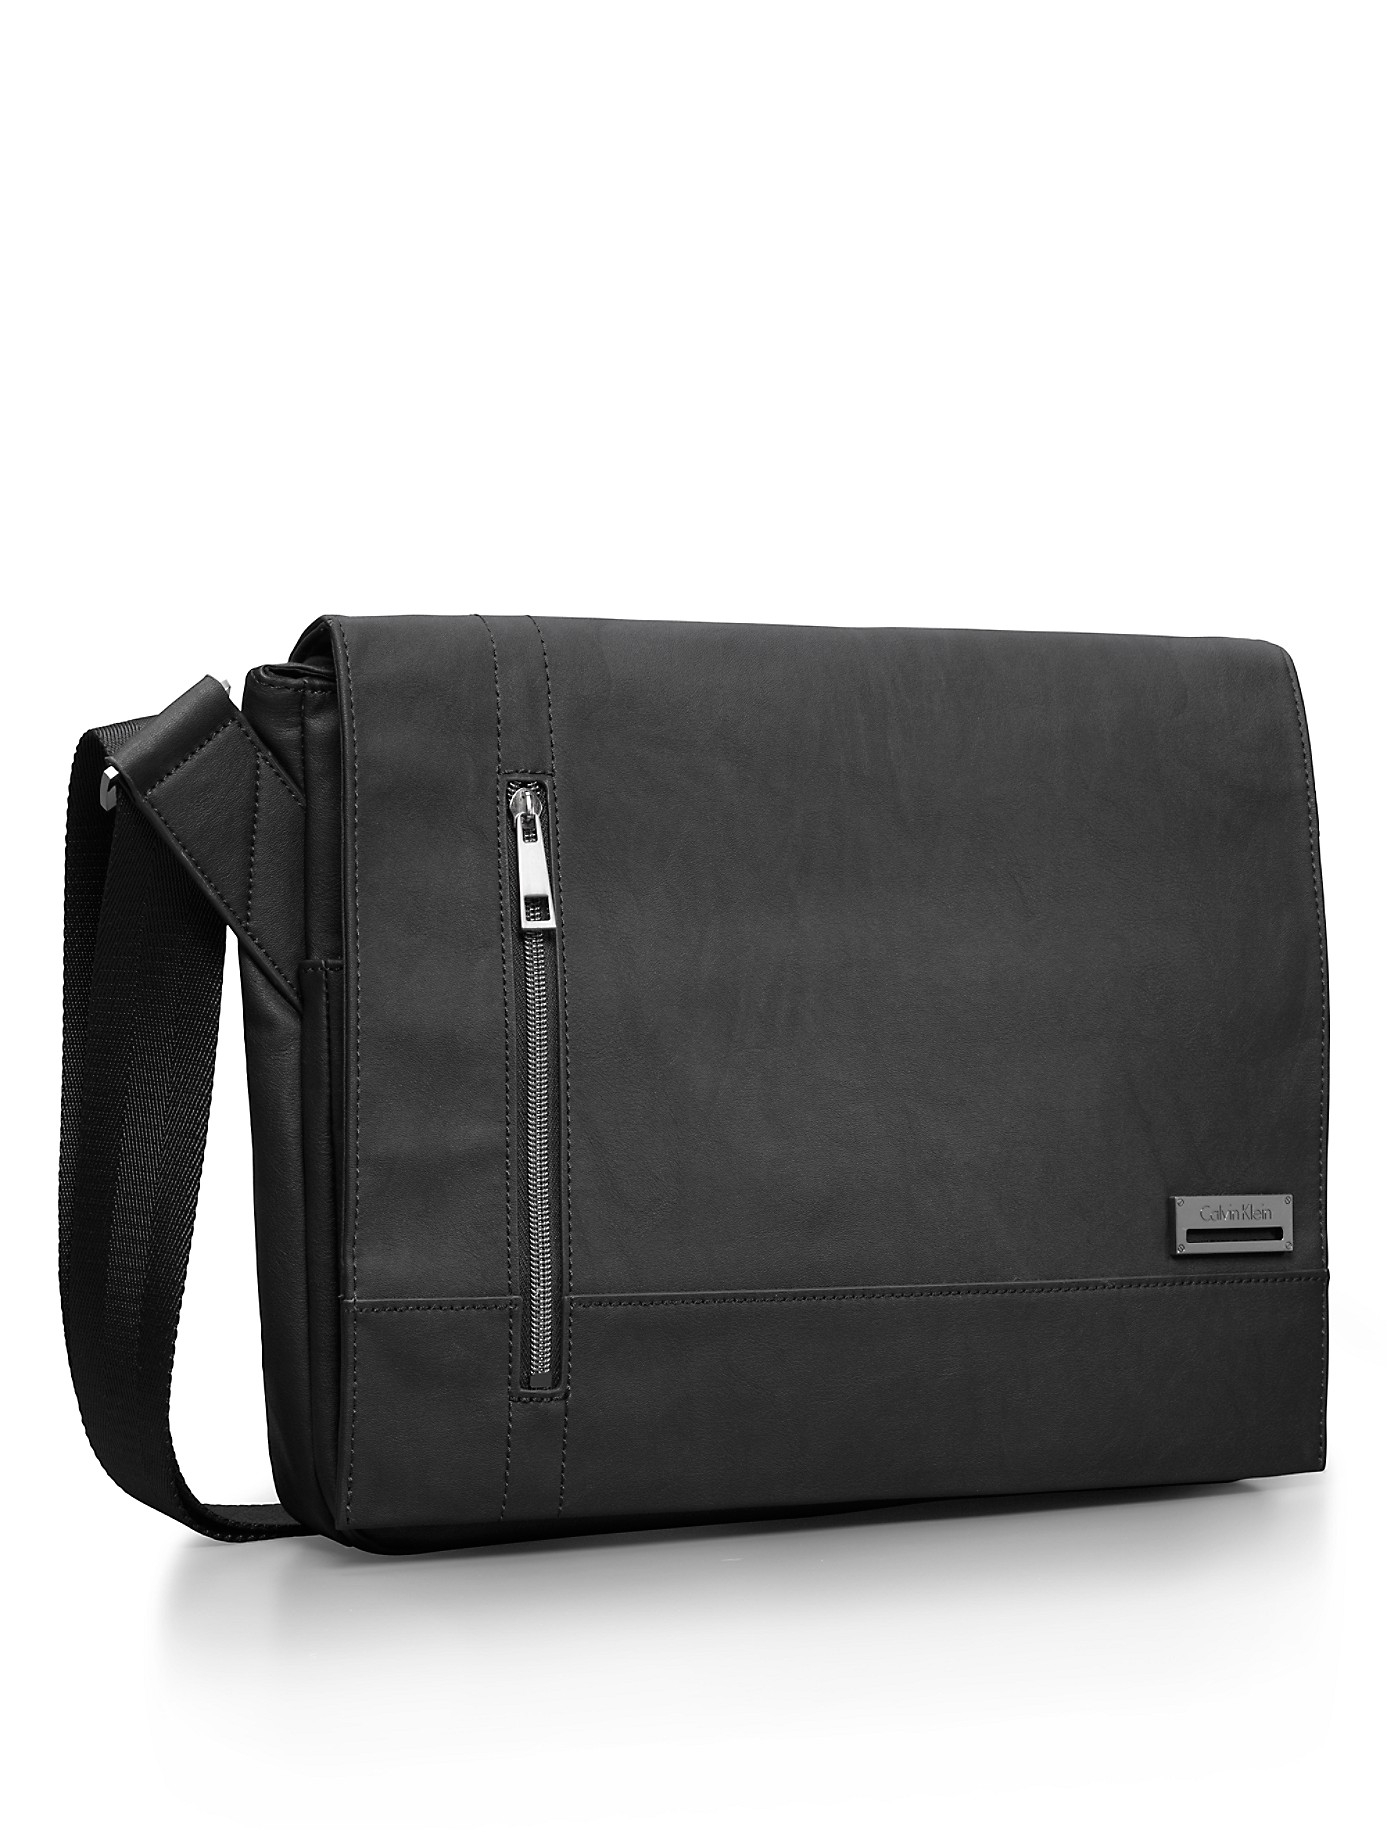 Calvin Klein White Label Landon City Messenger Bag in Black | Lyst